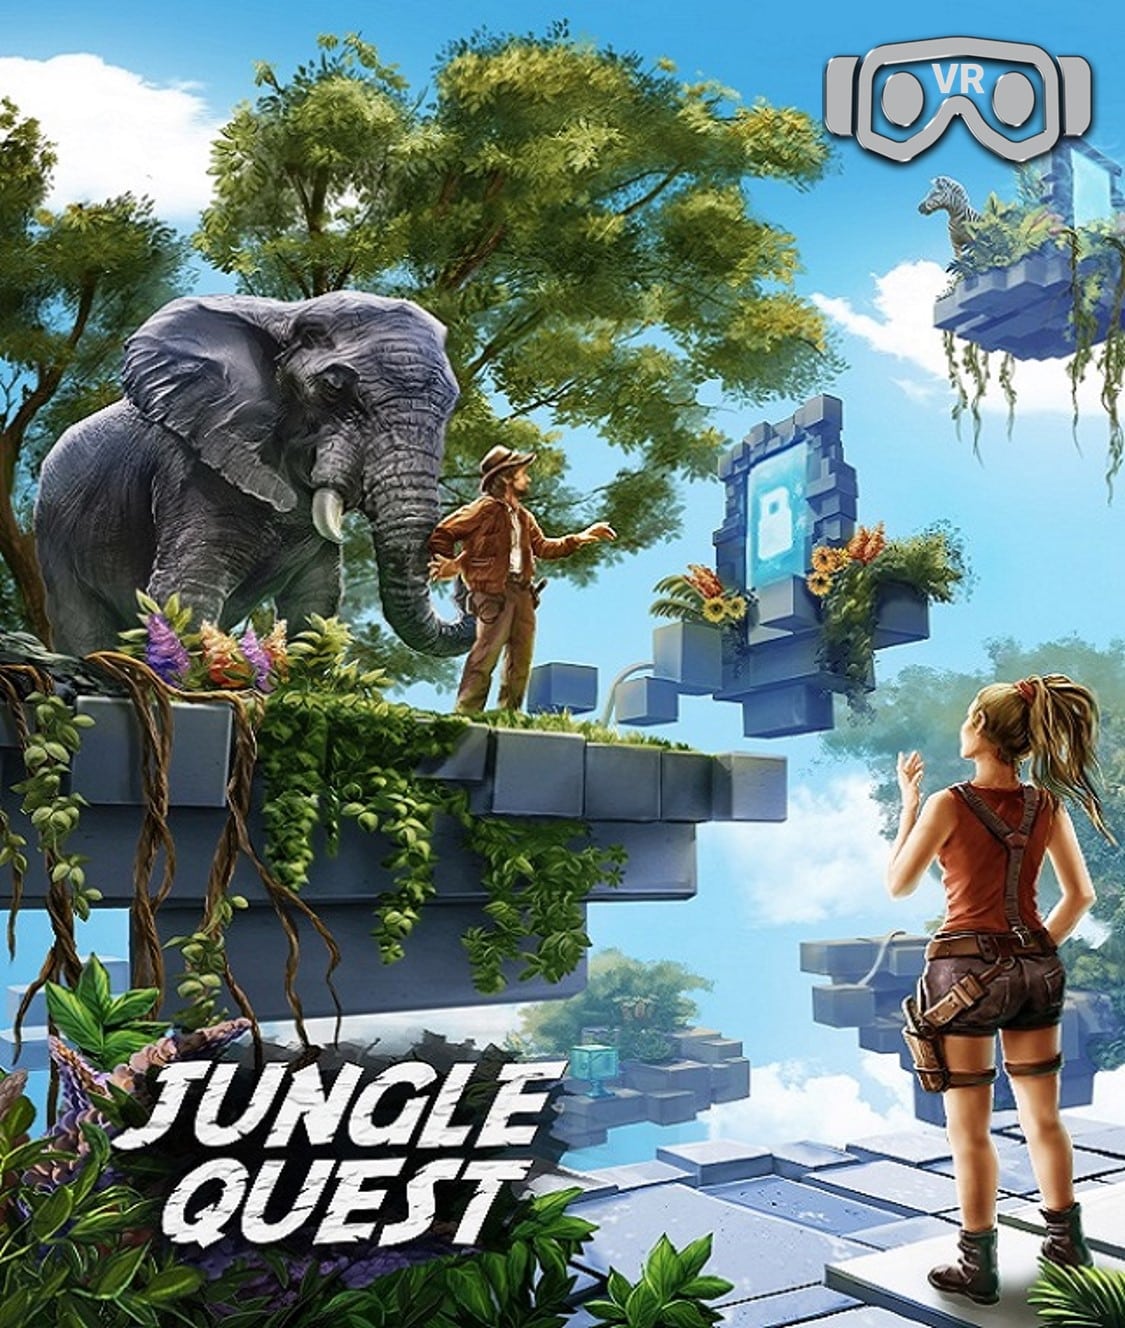 Jungle Quest Entermission Virtual Reality Escape Room x VR